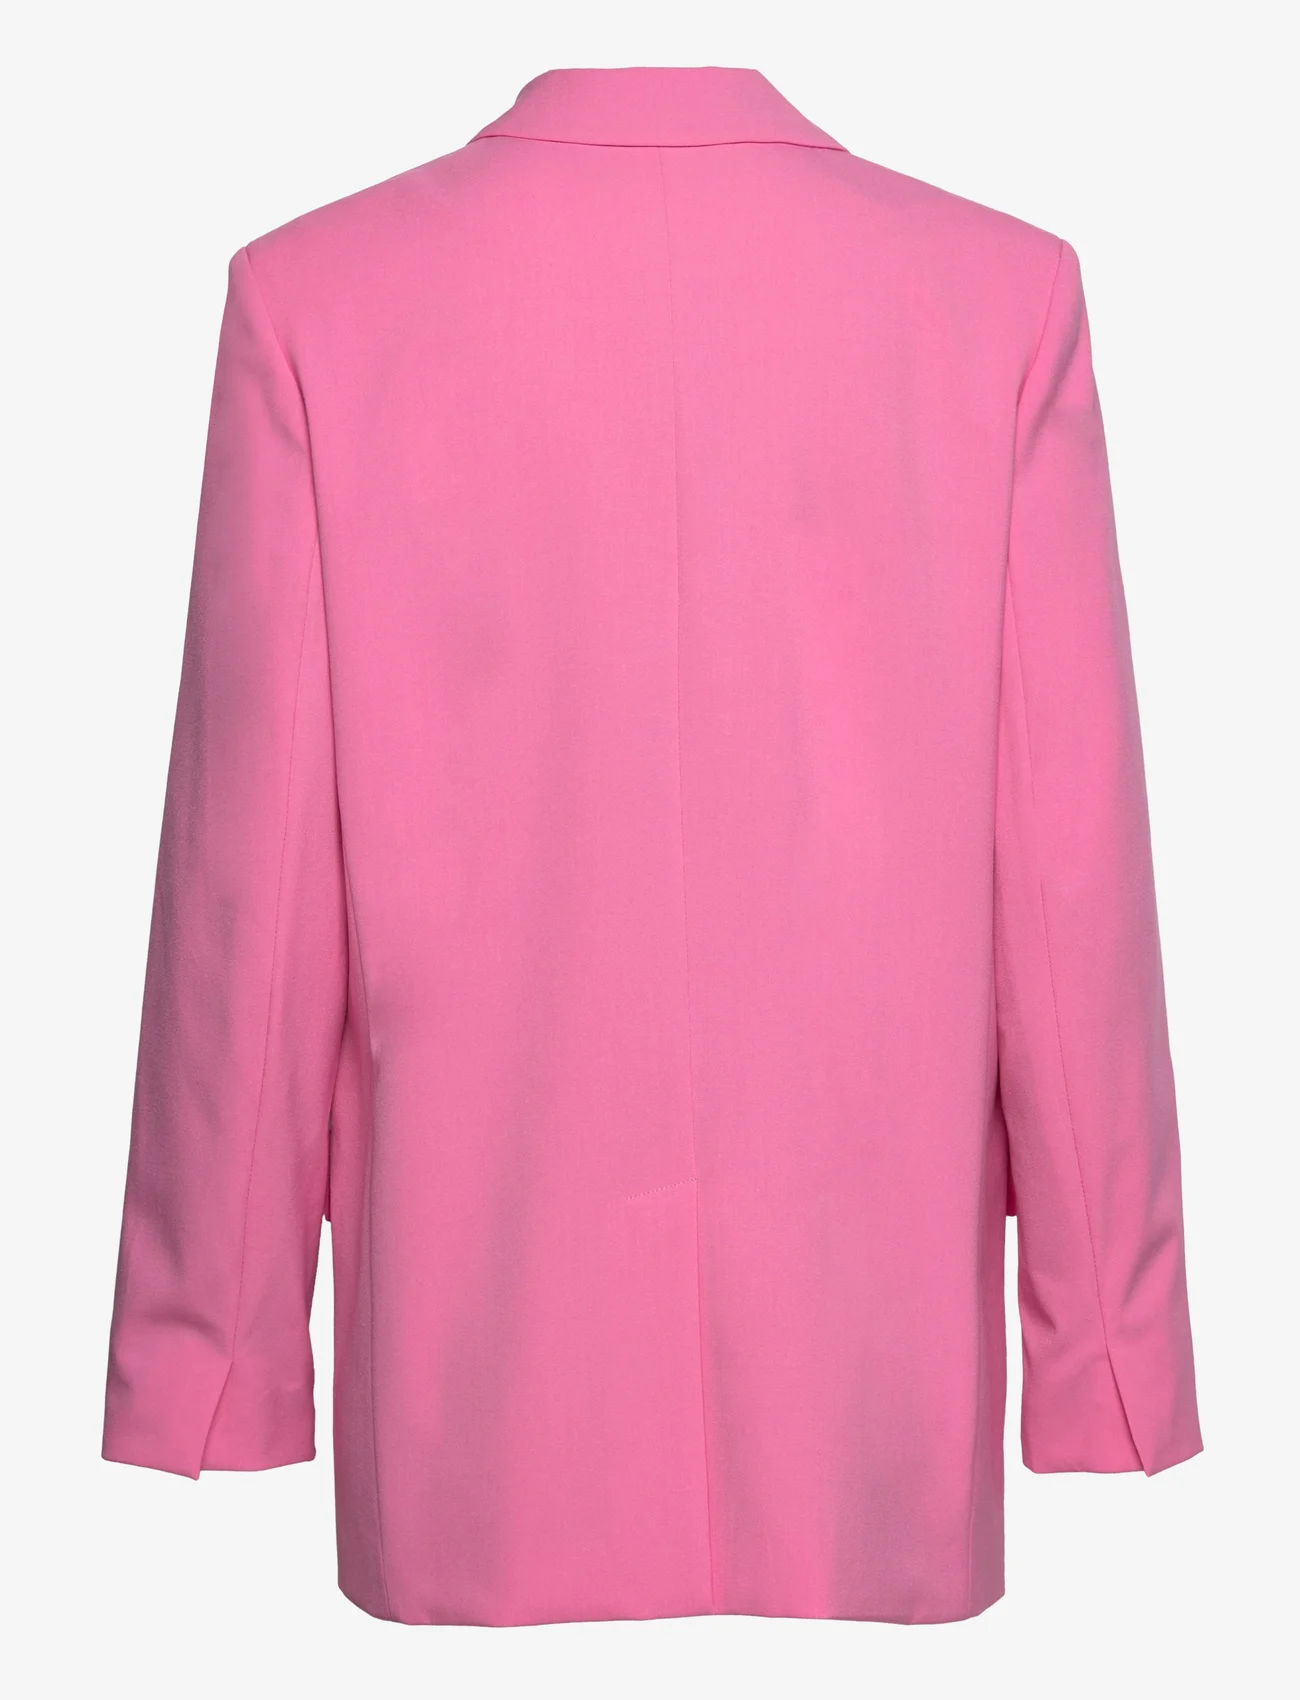 Modström - AnkerMD blazer - feestelijke kleding voor outlet-prijzen - cosmos pink - 1